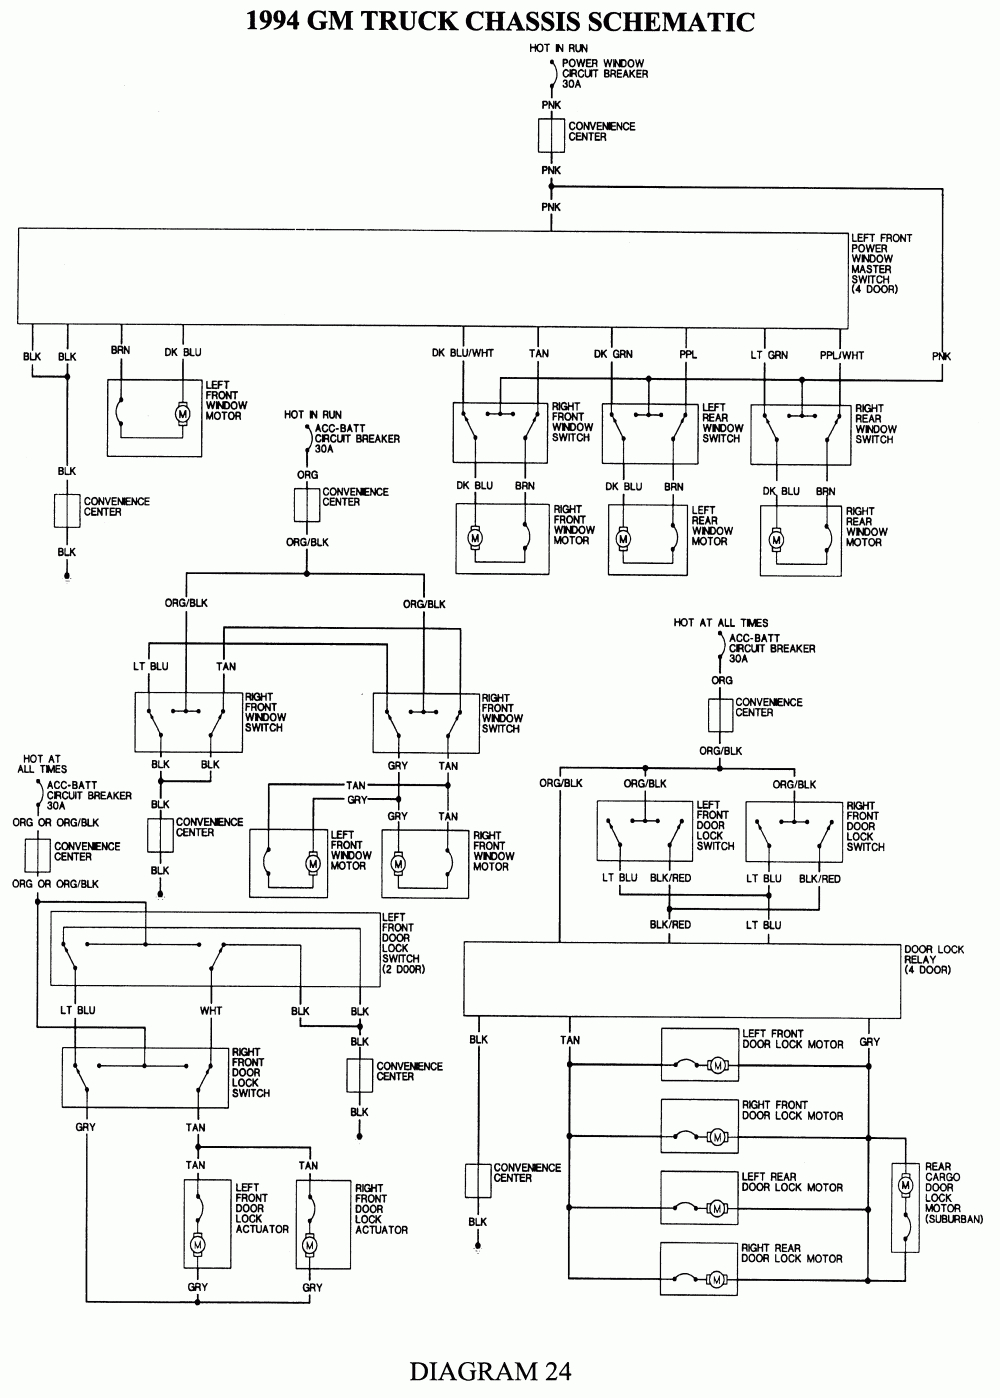 04 chevy tahoe radio wiring diagram - 2004 chevy tahoe radio wiring diagram wiring diagram